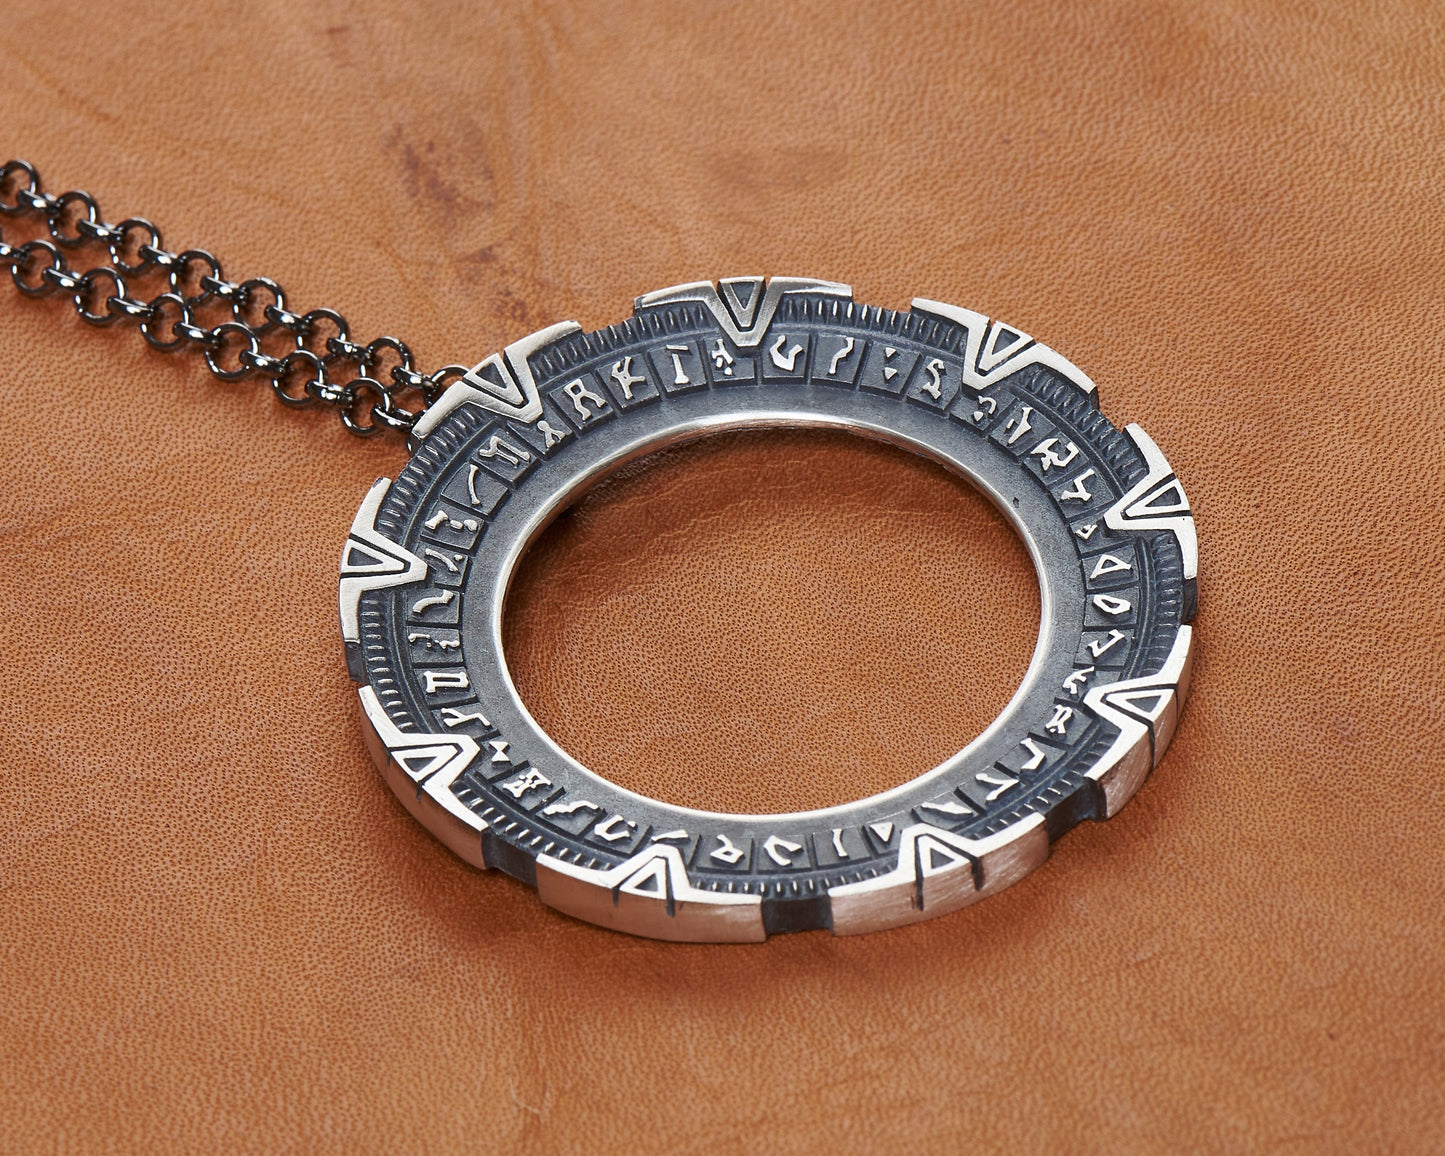 925 Sterling Silver / Brass Premium Quality Stargate SG1 Atlantis Universe Portal Pendant Necklace - Stargate Atlantis Jewelry Charm Amulet - Stargate Merchandise Cosplay - Baldur Jewelry